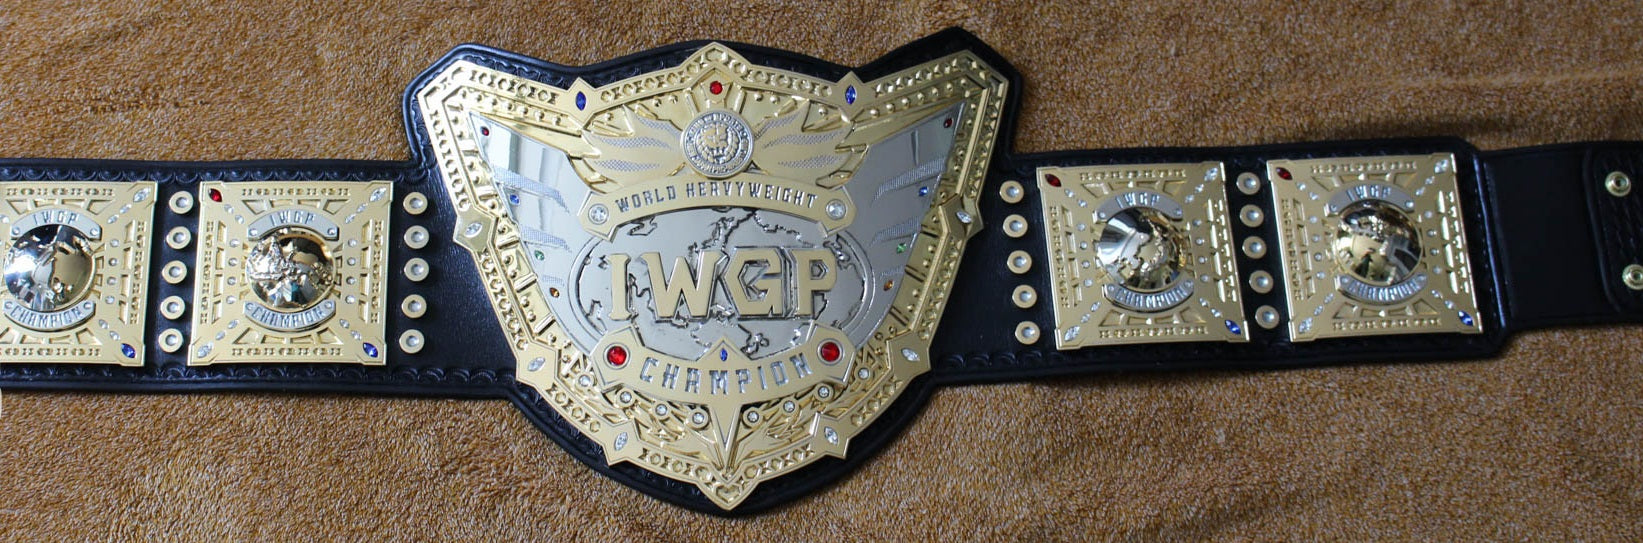 IWGP United States Championship Heavyweight Wrestling Belt